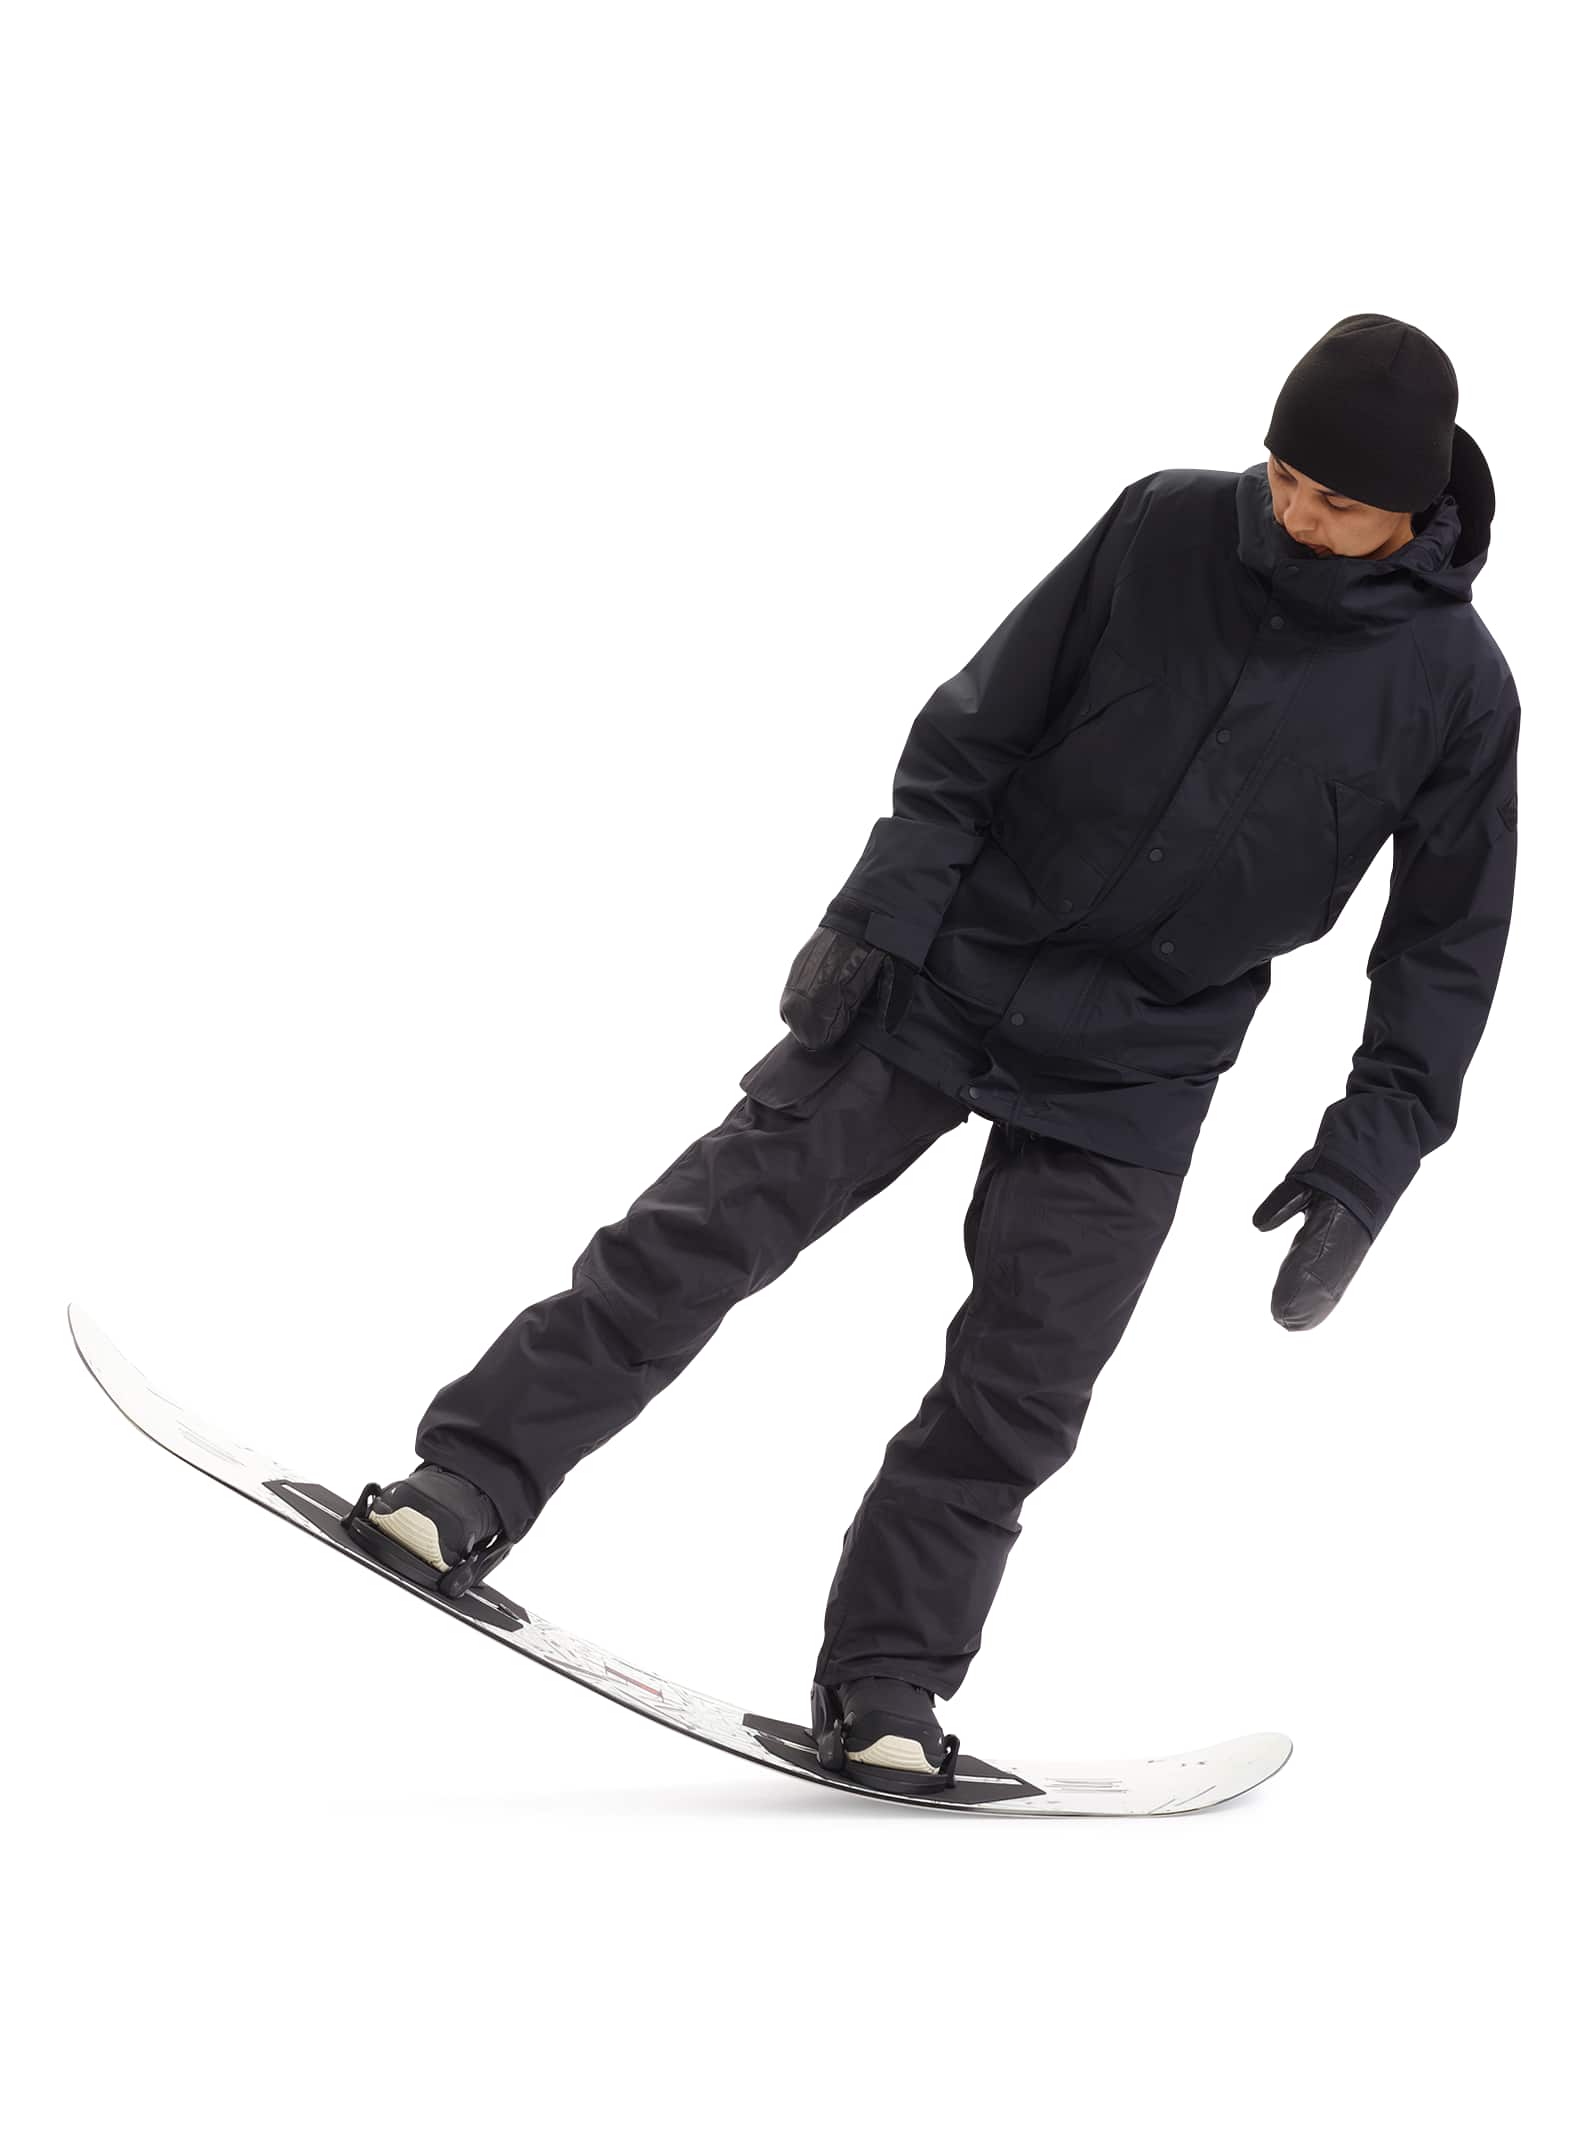 Men's Burton Name Dropper Snowboard | Burton.com Winter 2019 US